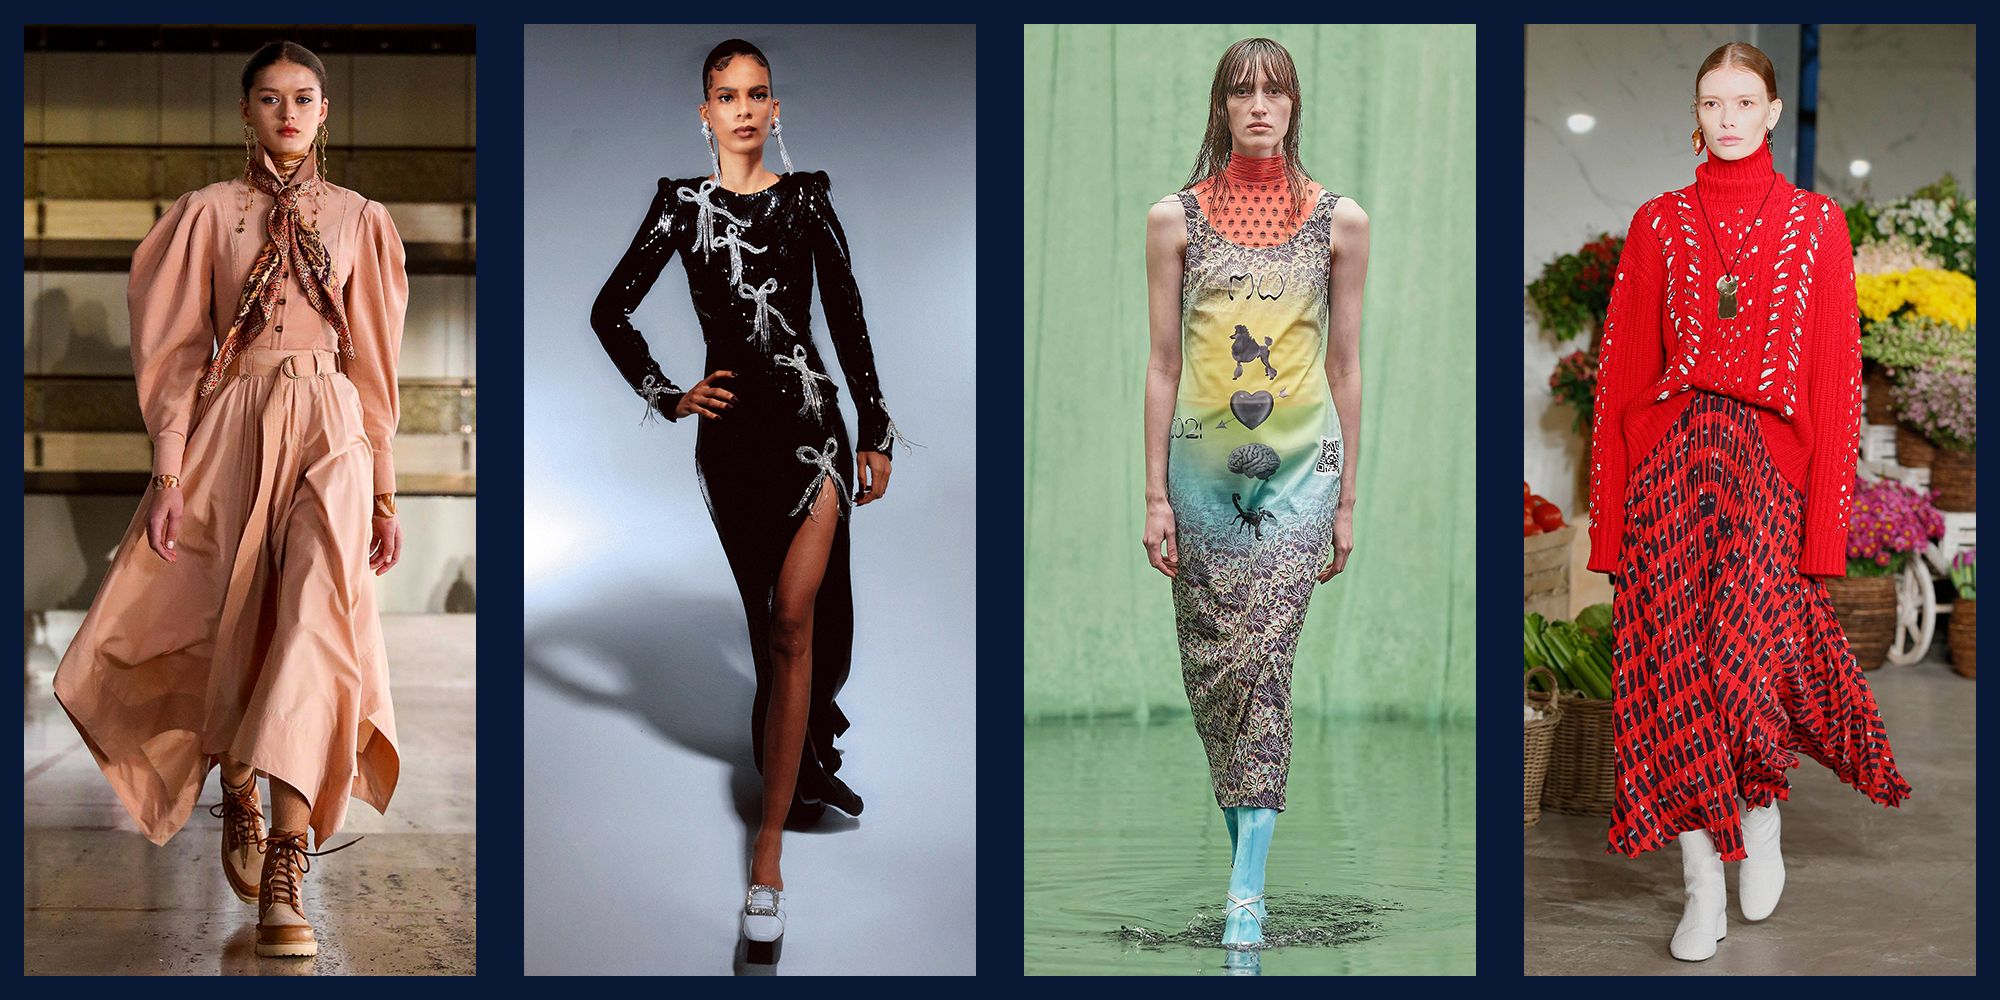 Topfashion – Page 20 – Top Fashion has the newest fashion week